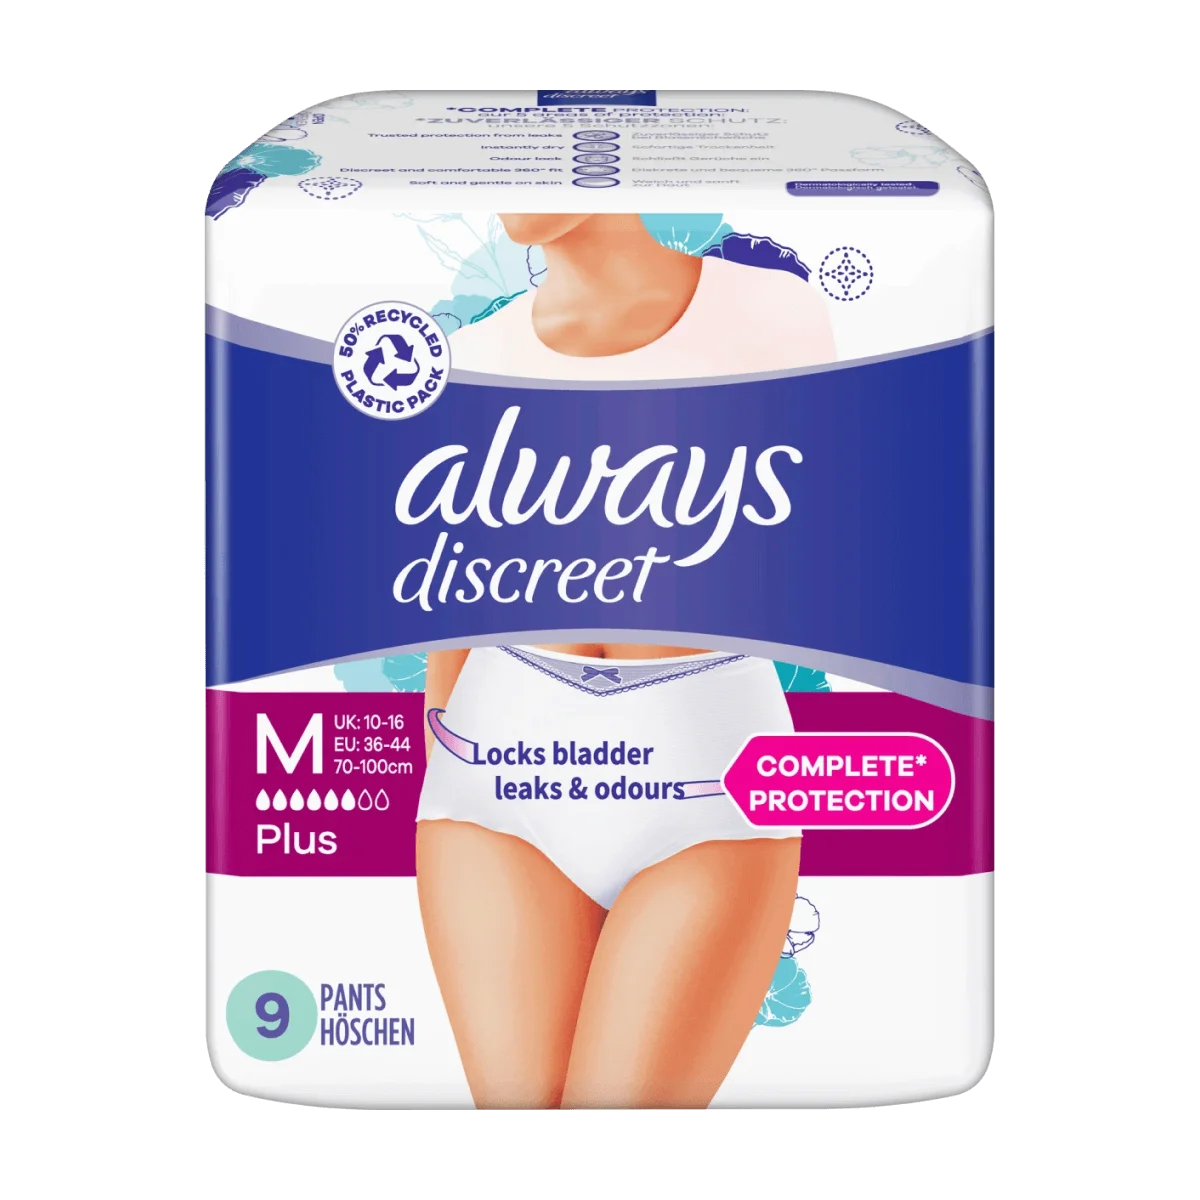 always discreet Pants Inkontinenz Gr. M Plus, 9 Stk